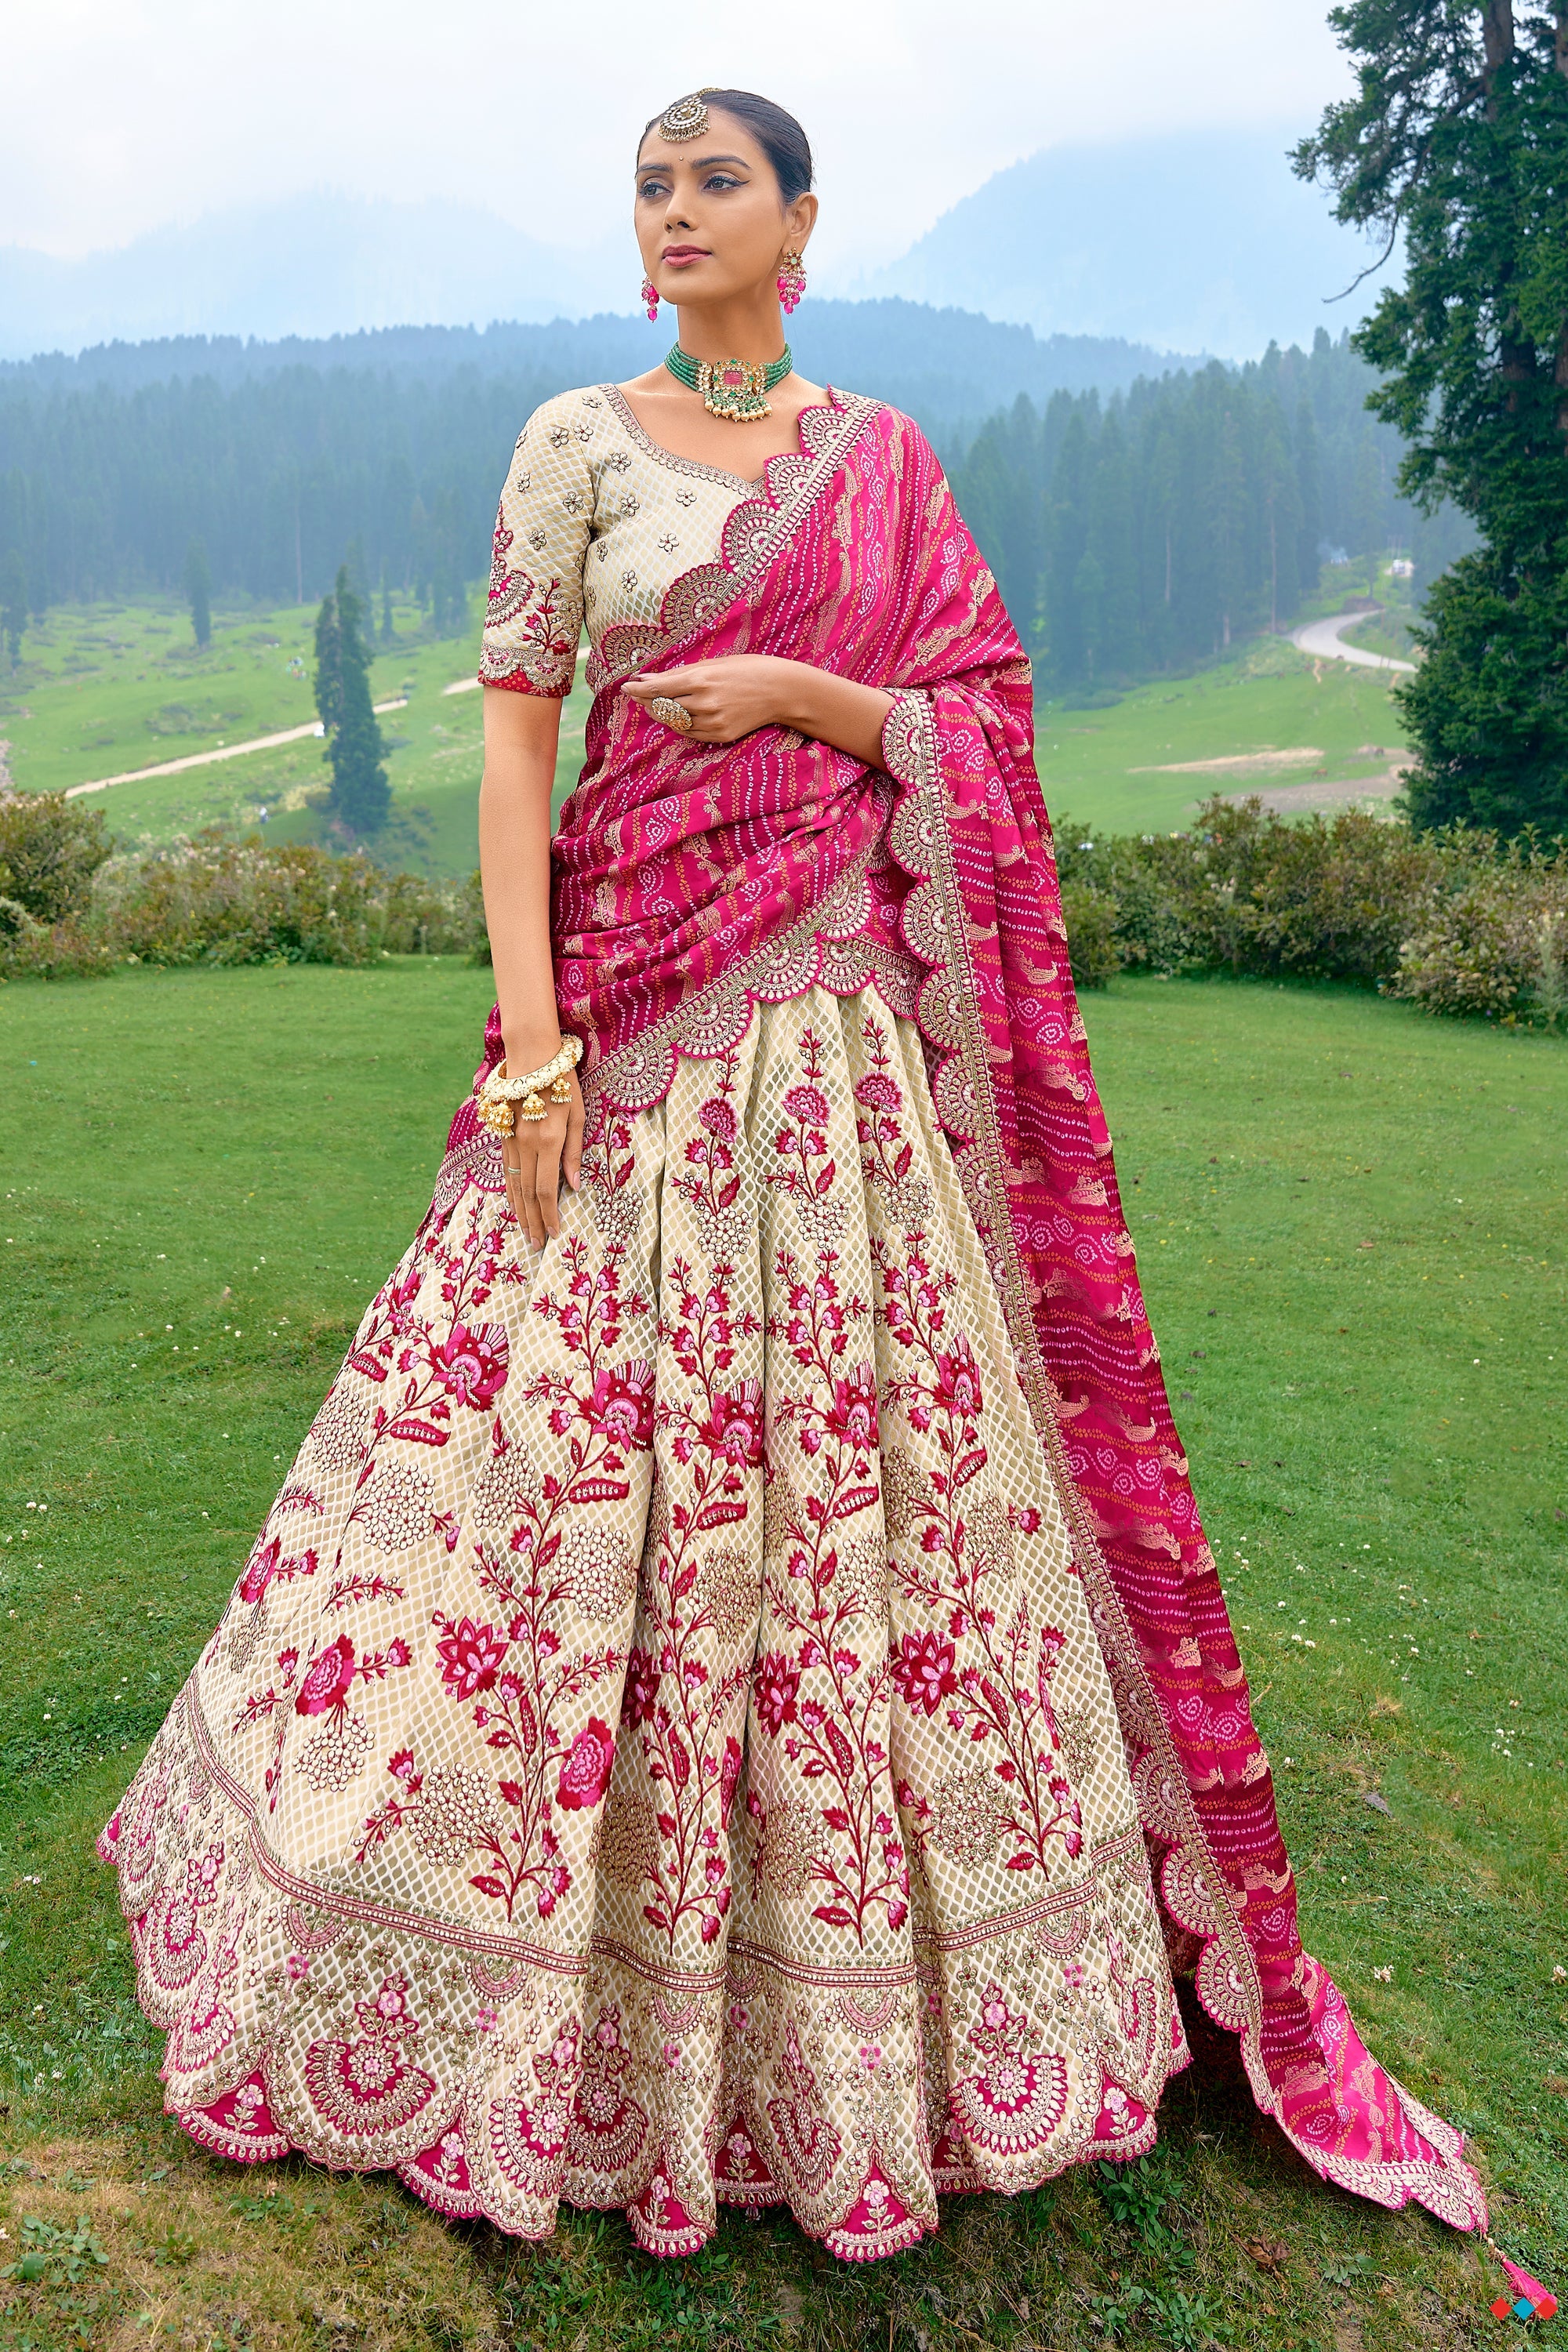 Dusky Brides Who Nailed The Look! | Indian bride poses, Bride, Bridal  lehenga choli